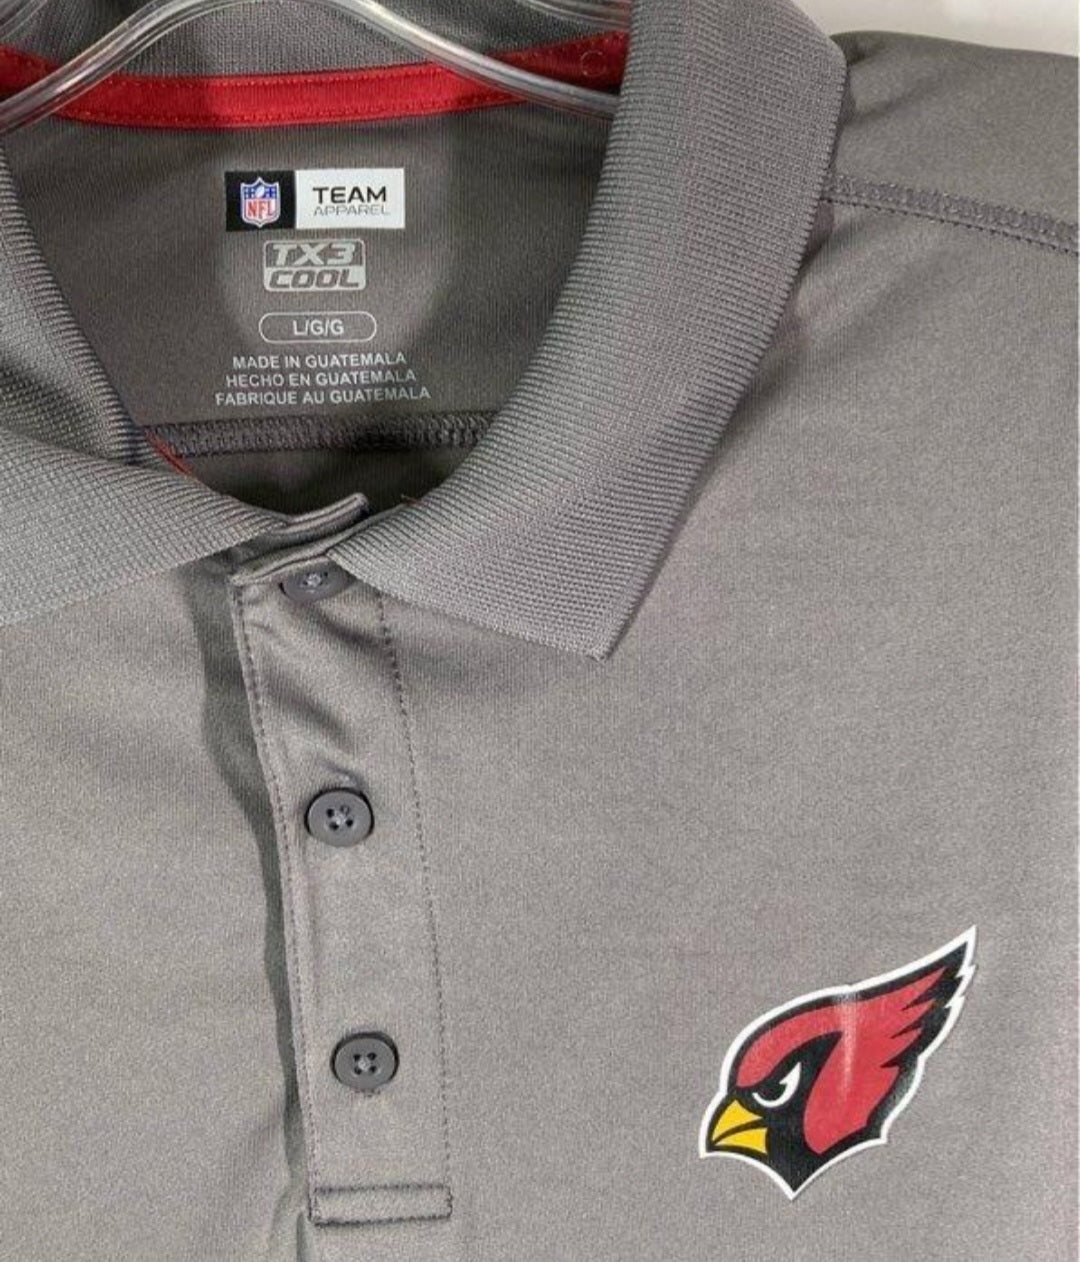 Nice *NFL Arizona Cardinals Football Graphics Polo (Team Apparel) TX3 Cool (Size Lg)